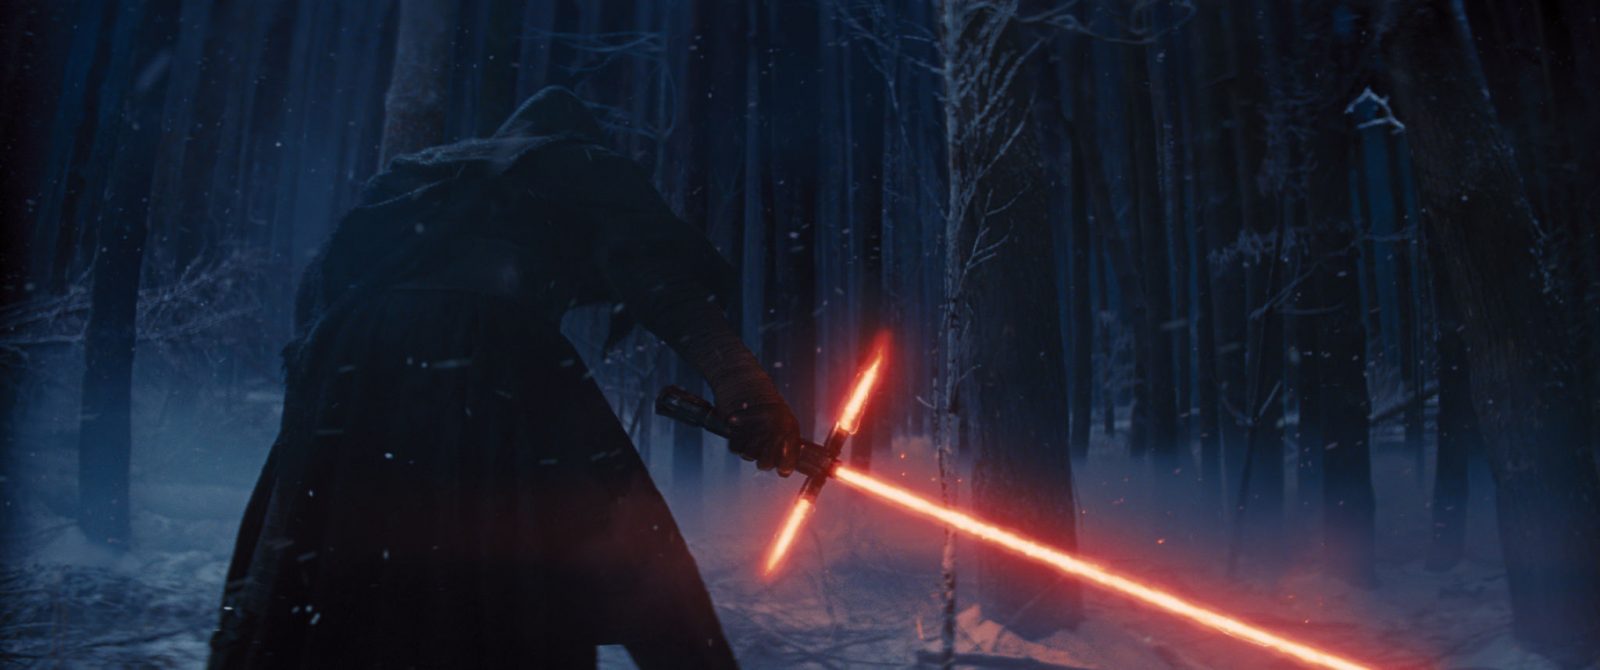 Star Wars VII The Force Awakens 41 - Kylo Ren and lightsaber